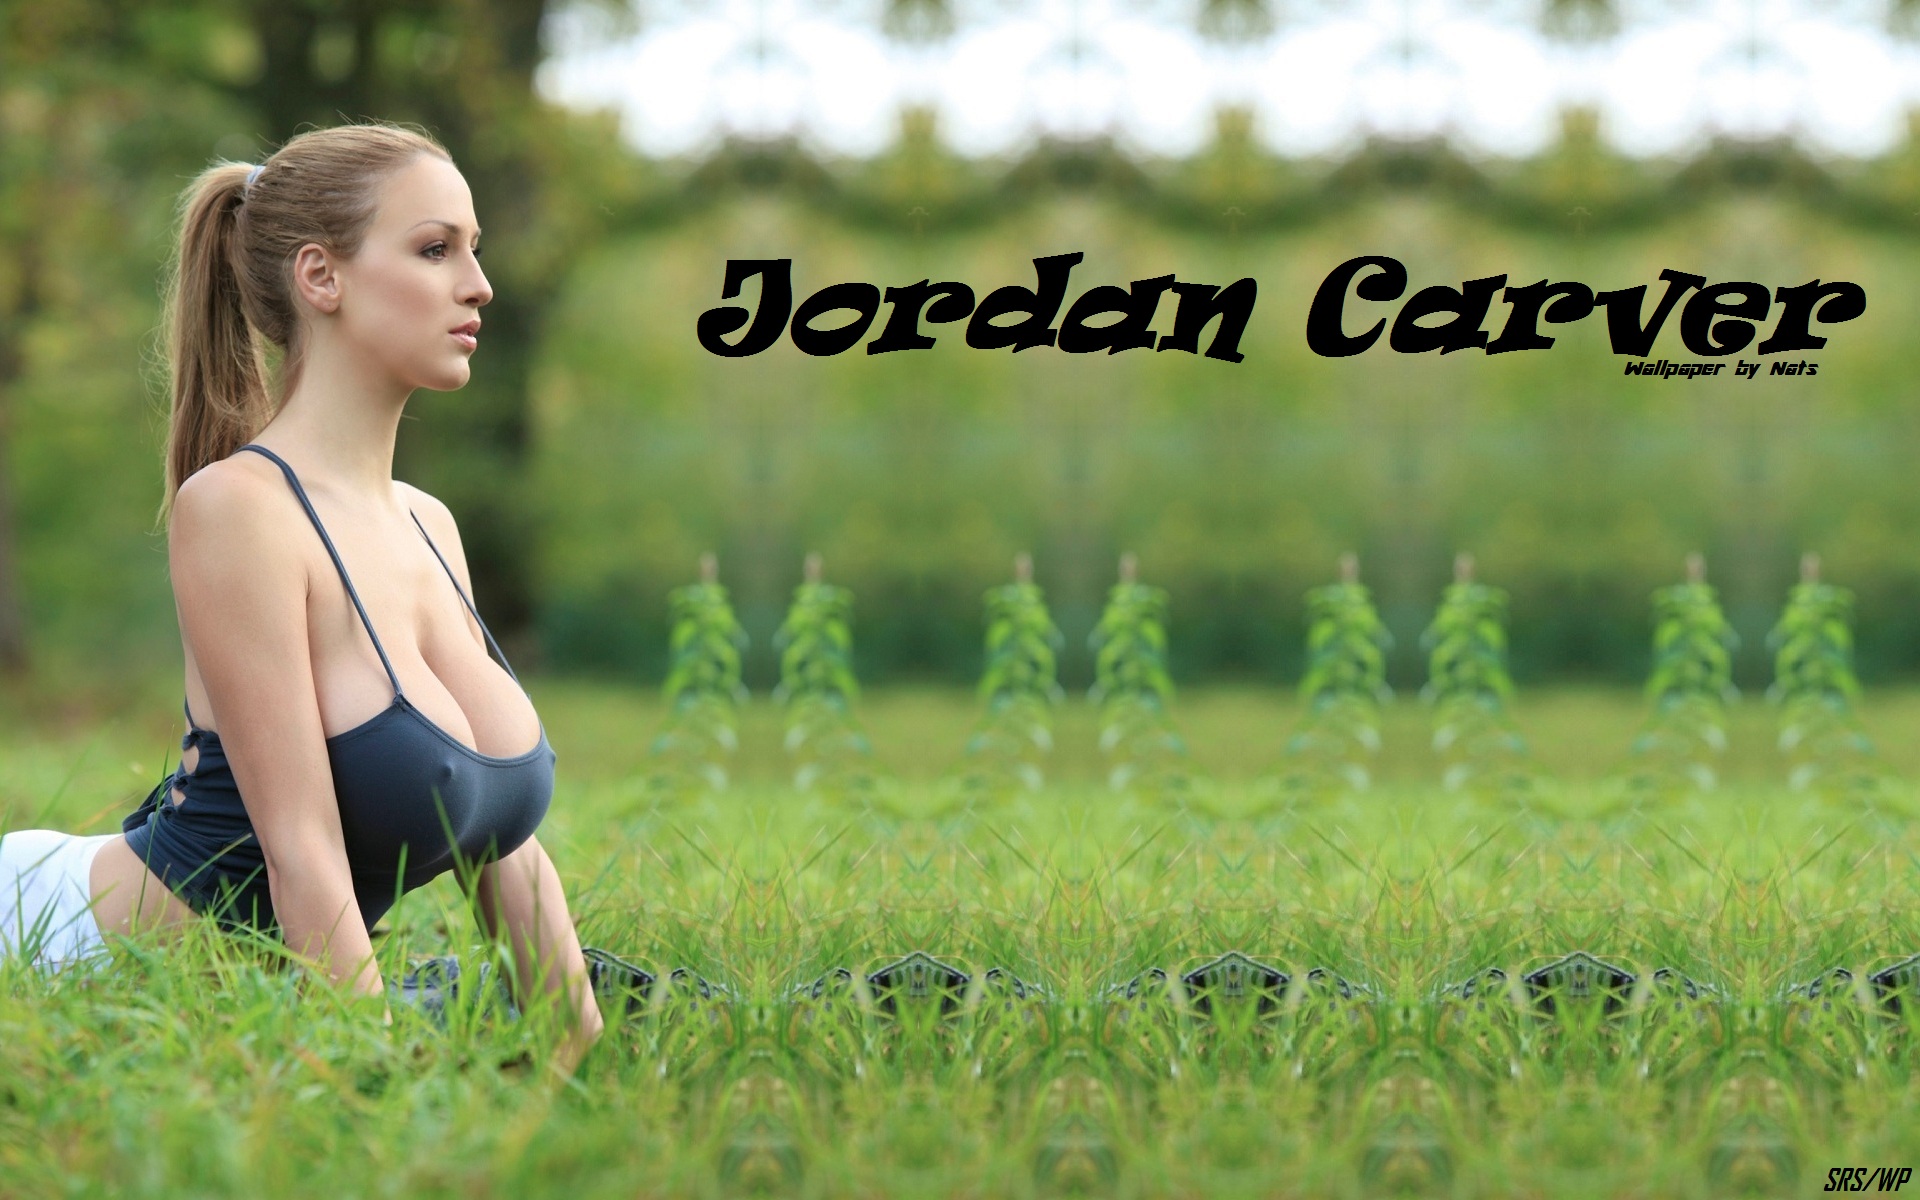  Download High quality Jordan Carver Wallpaper Num 13 1920 x 1920x1200